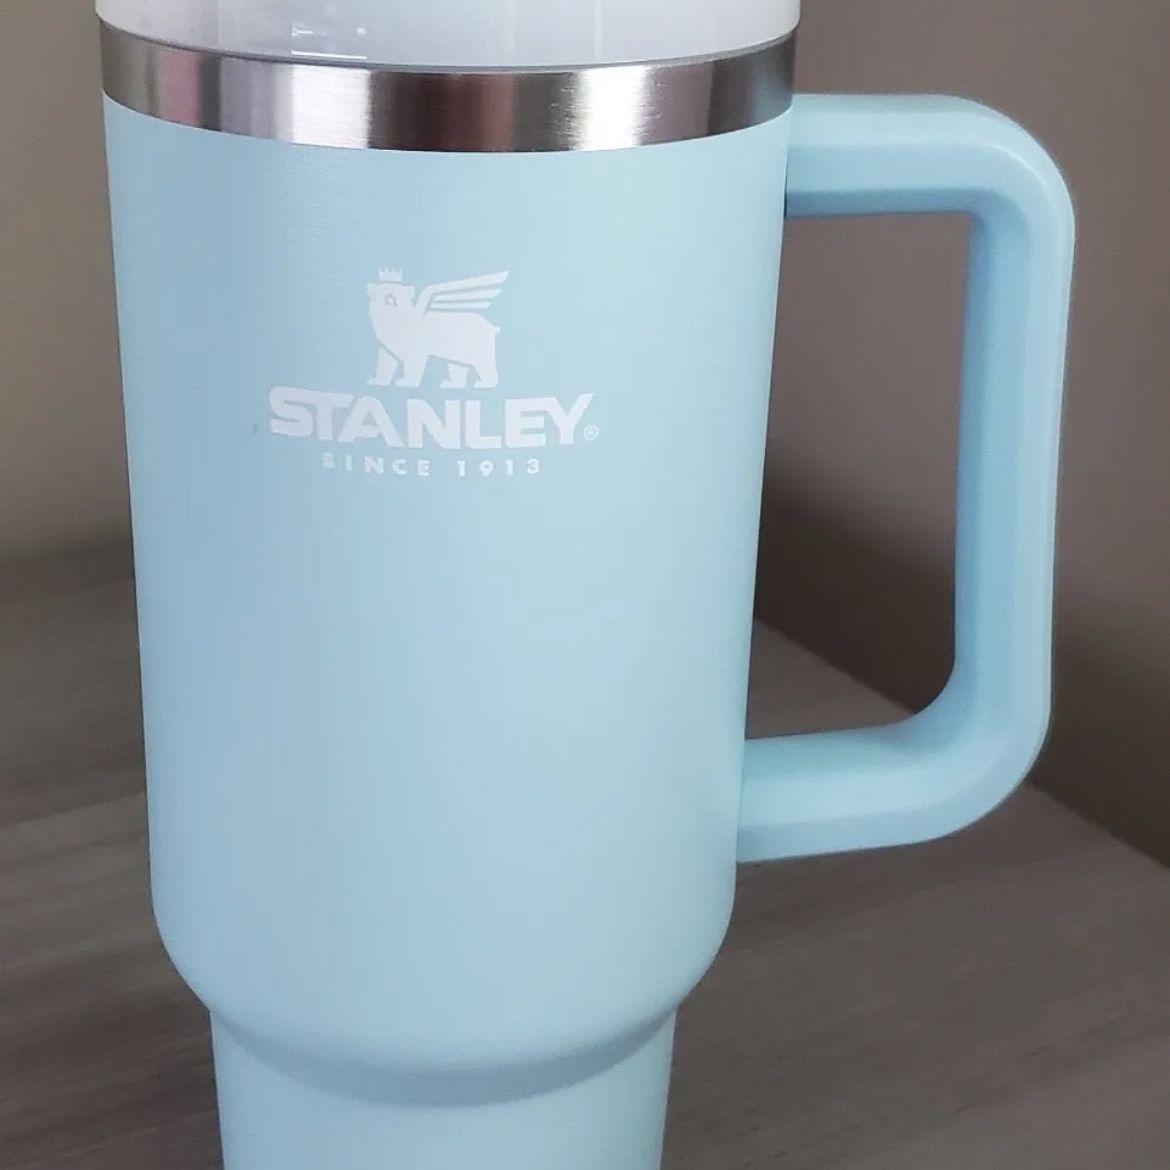 NEW* Stanley Adventure Quencher Travel Tumbler Cup 40oz for sale - Aqua  color